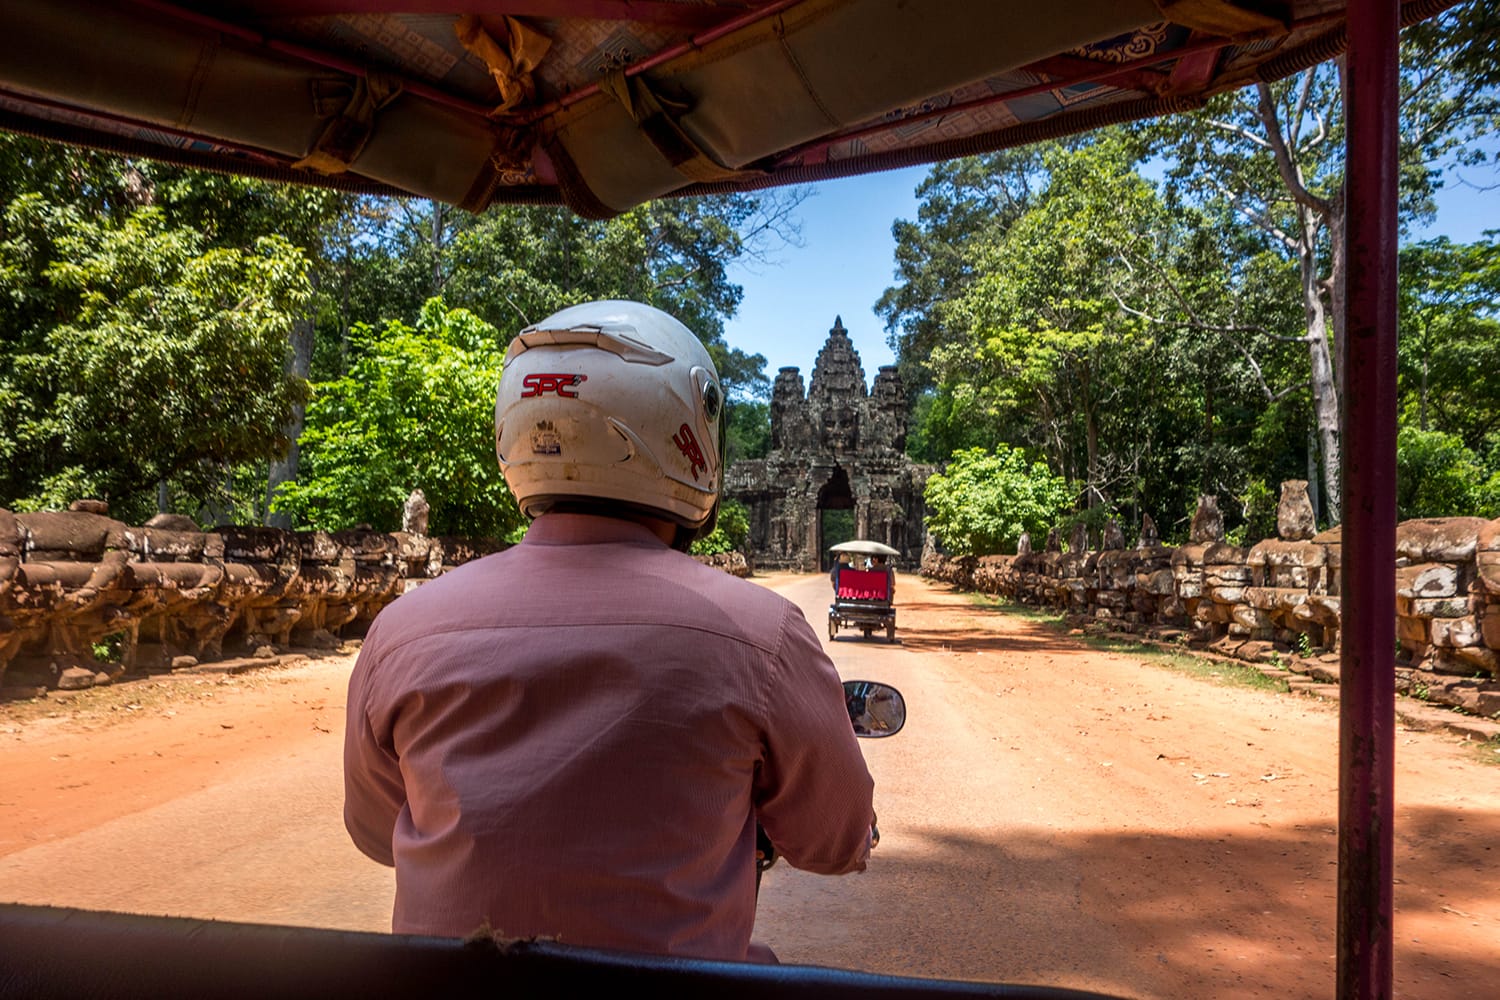 Tuk tuk at Angkor Wat in Cambodia